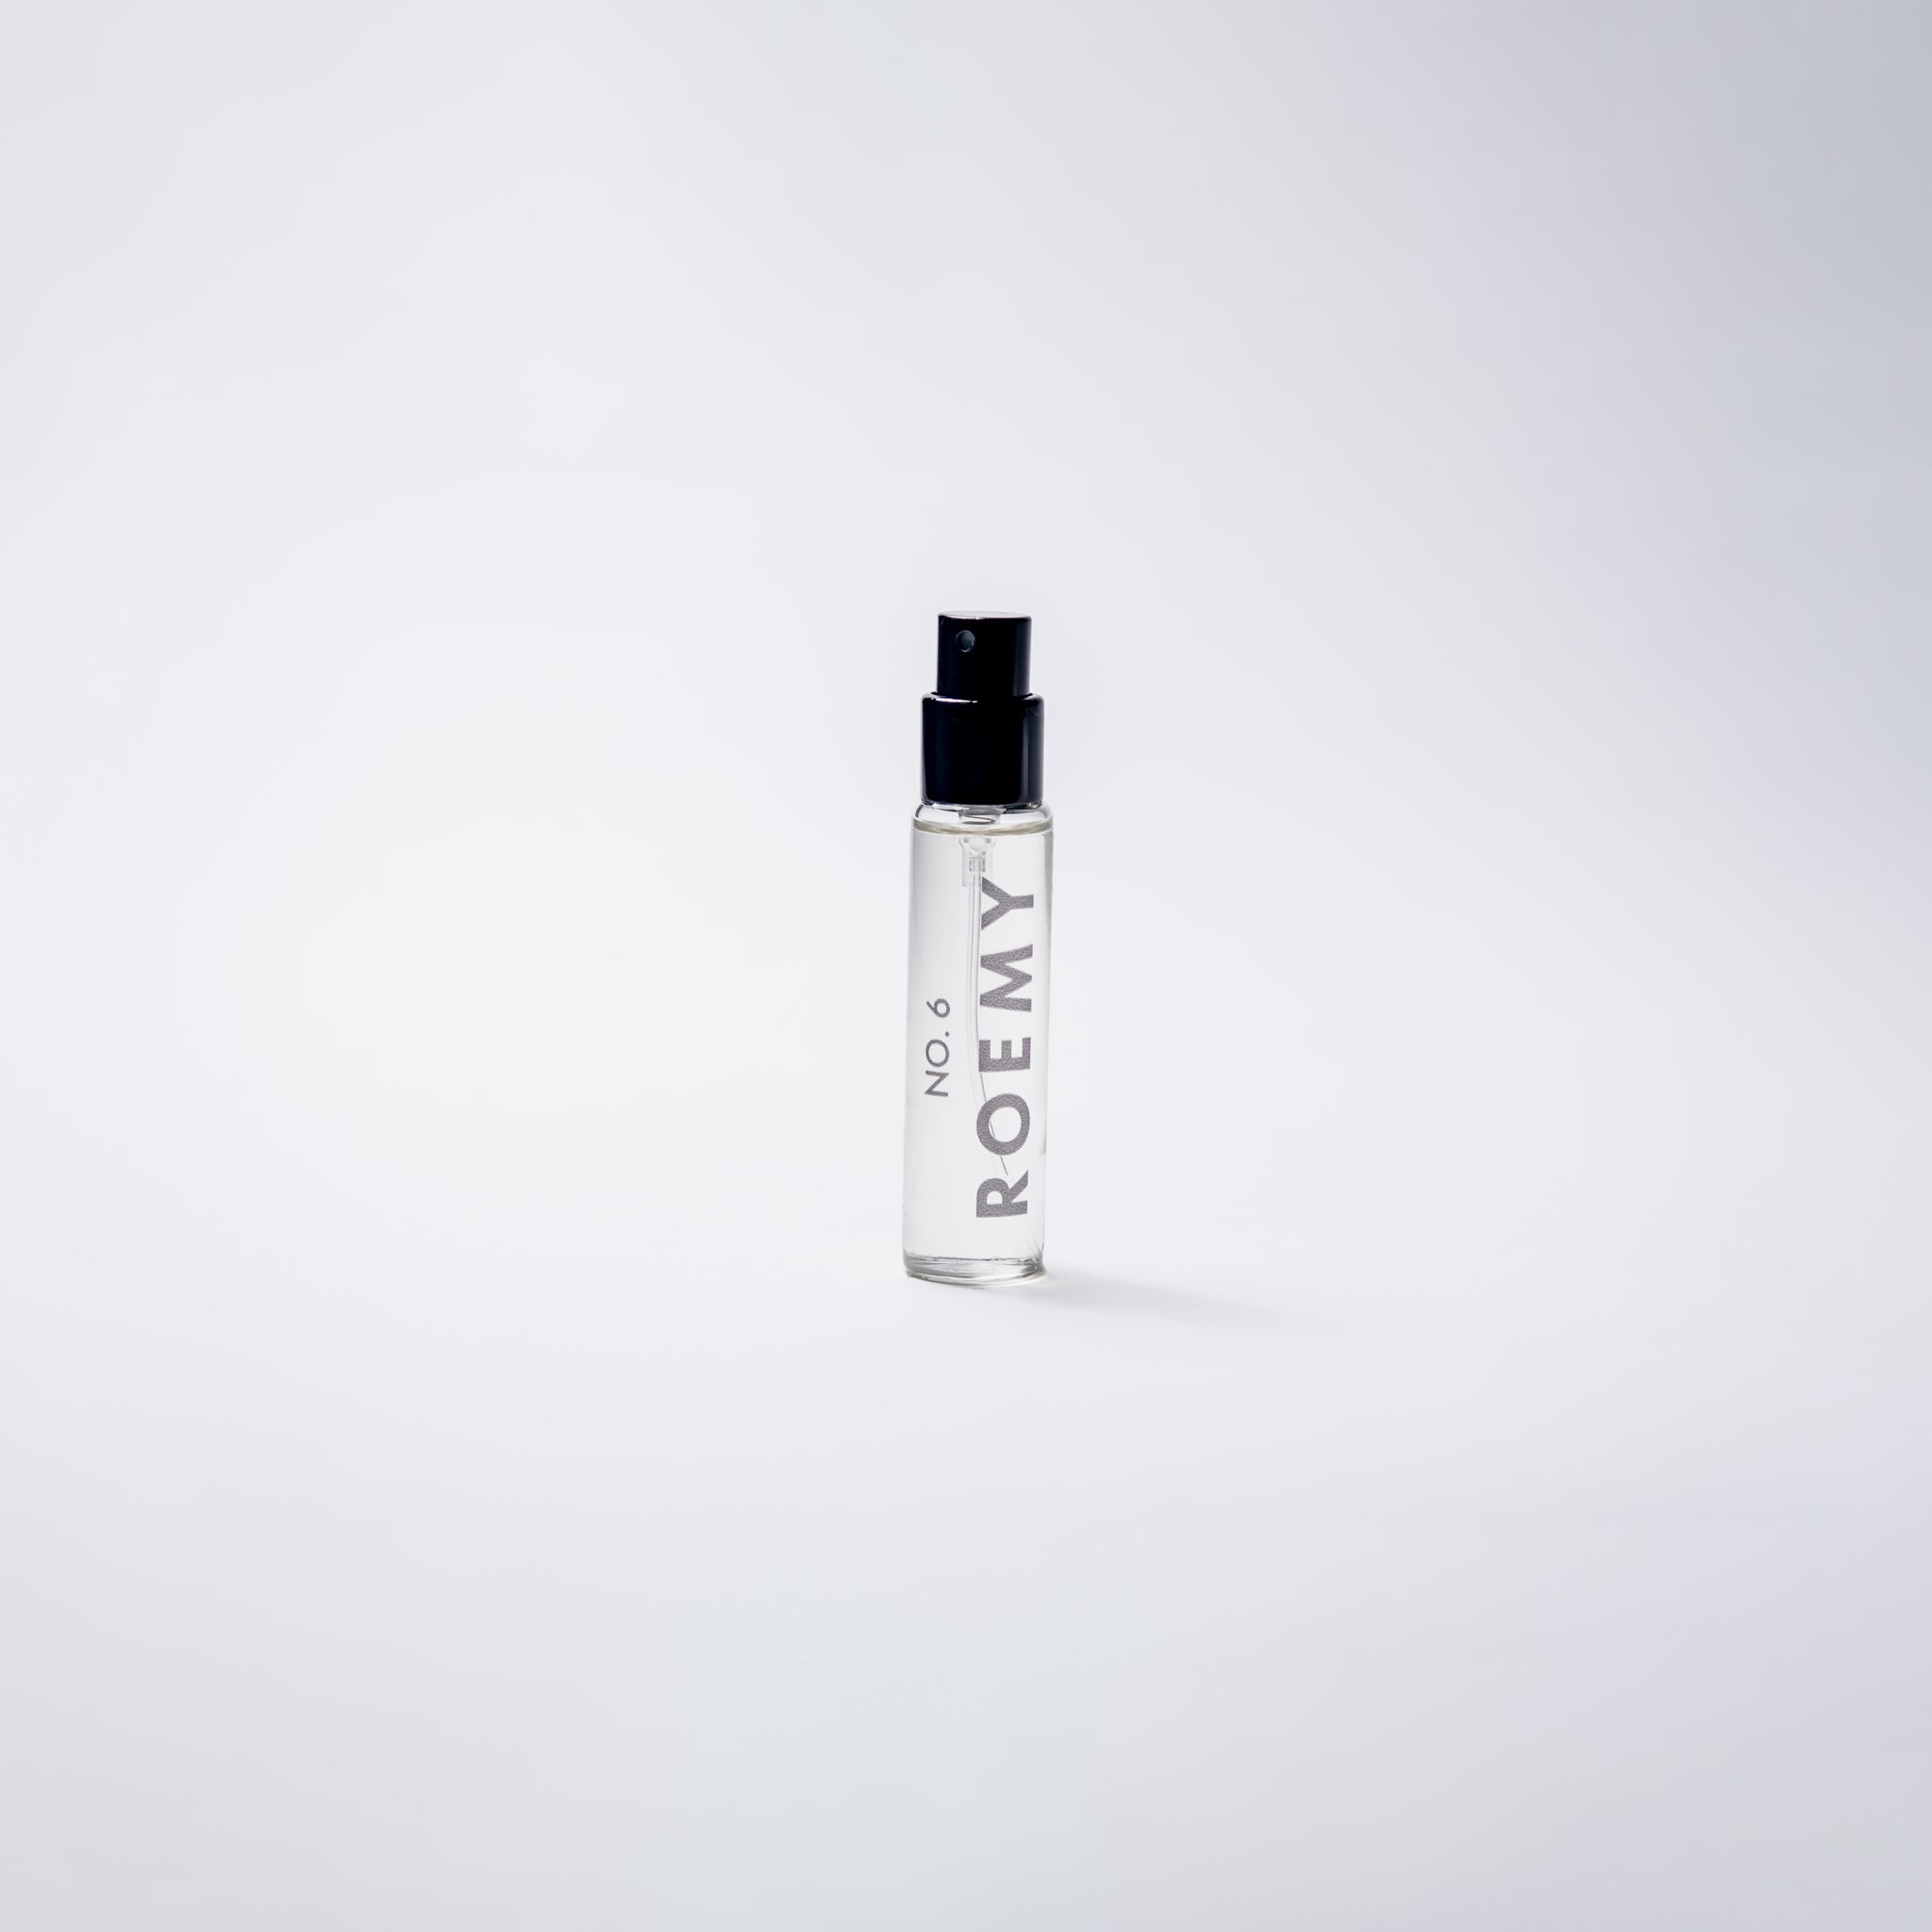 ROEMY No. 6 15mL Traveller Parfum - front